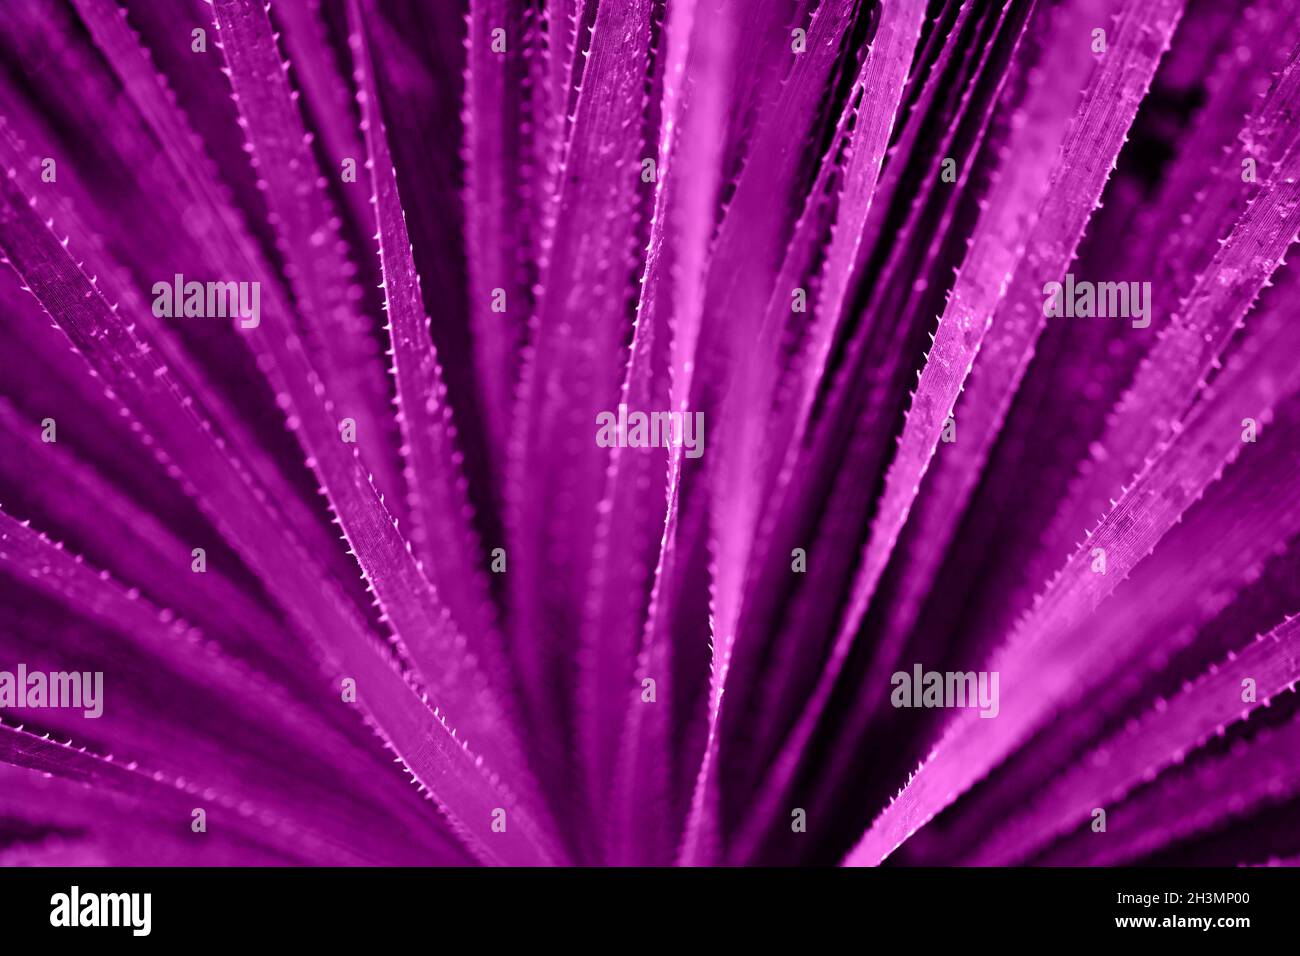 Selective focuse aloe close up background toned purple Stock Photo